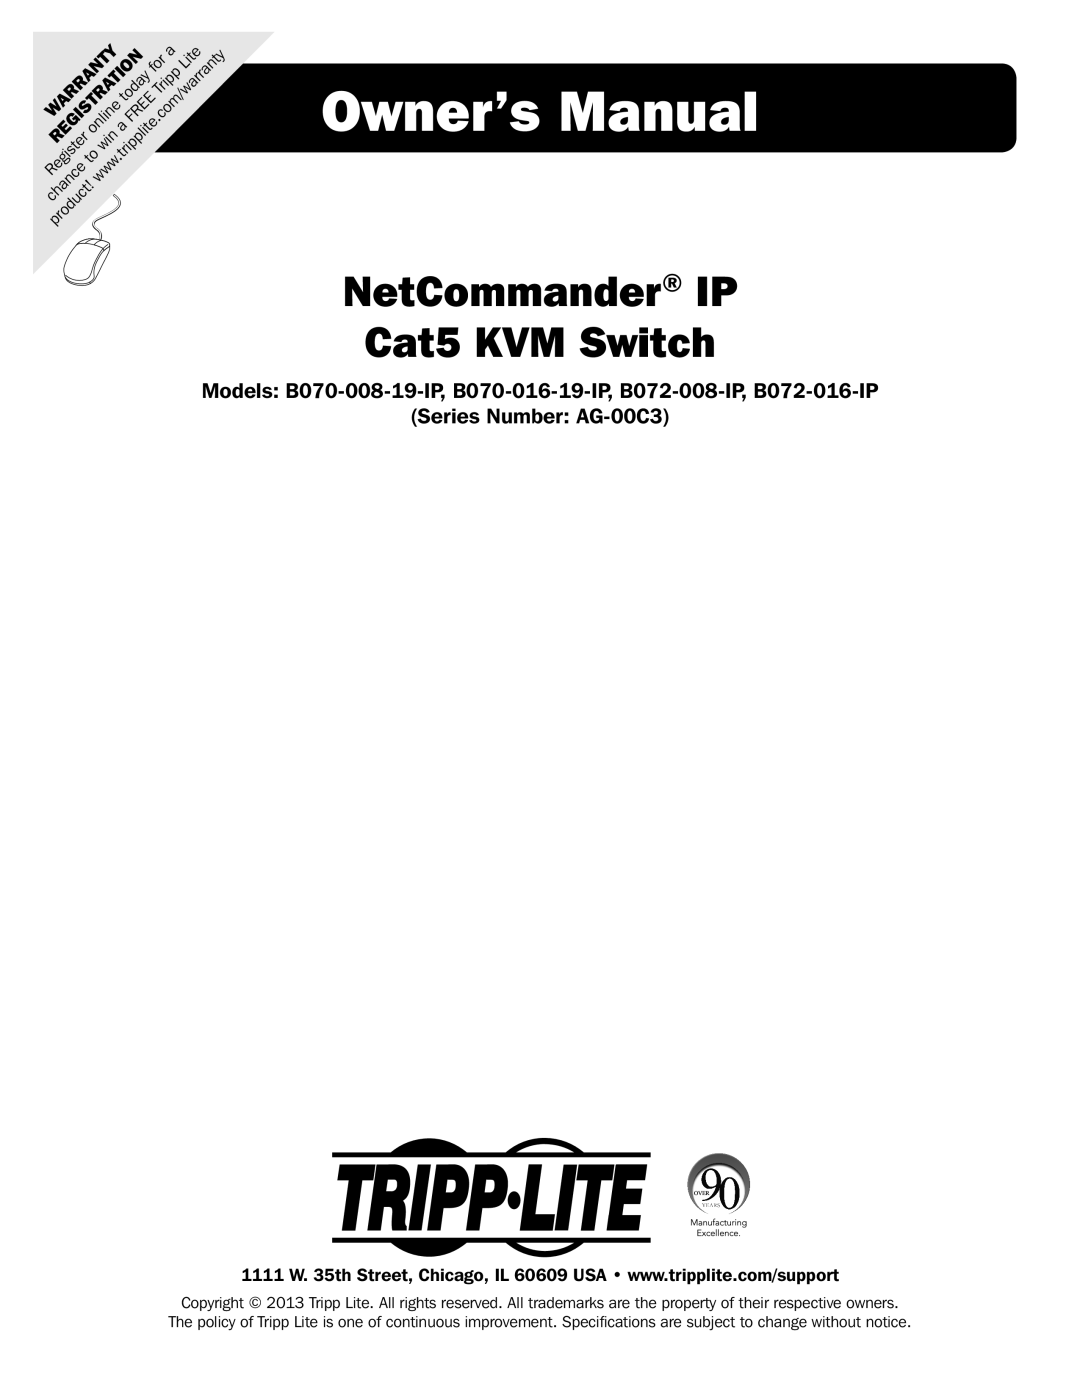 Tripp Lite B070-016-19-IP owner manual Owner’s Manual, NetCommander IP Cat5 KVM Switch, Series Number AG-00C3, Warranty 